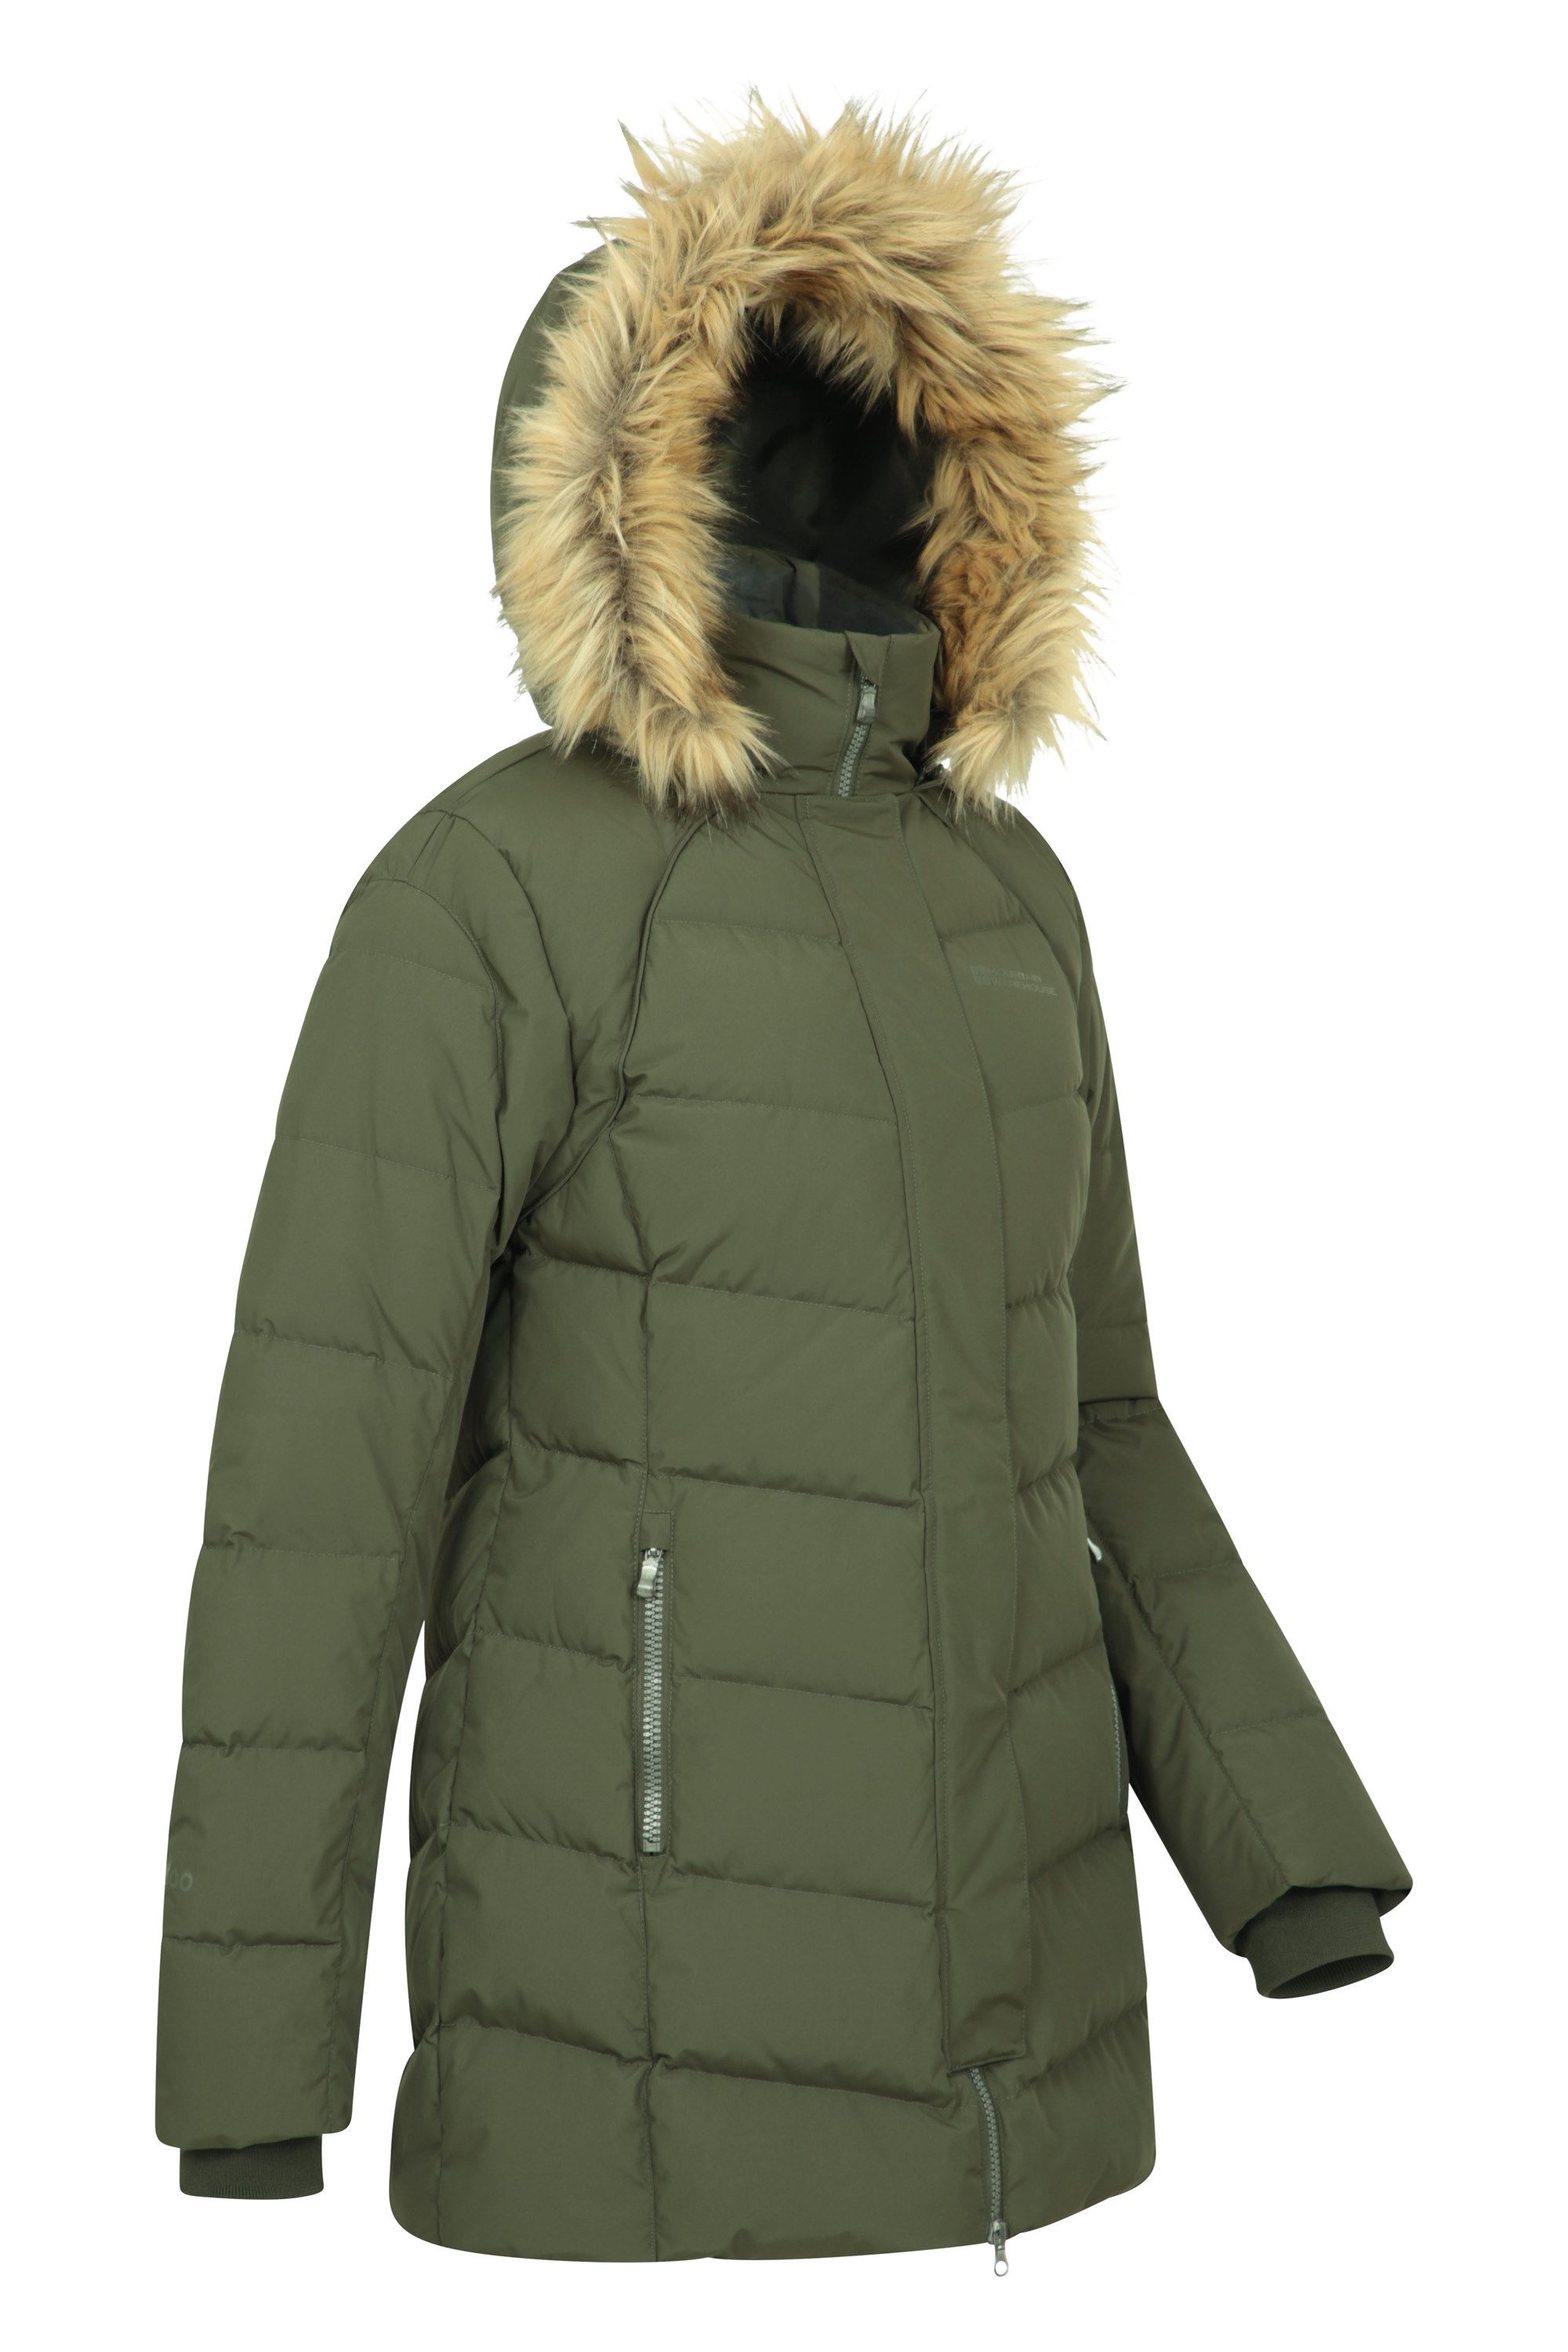 Green Mountain Warehouse Stretchy Ladies Outdoor in Khaki Womens Clothing Coats Parka coats - Save 20% 